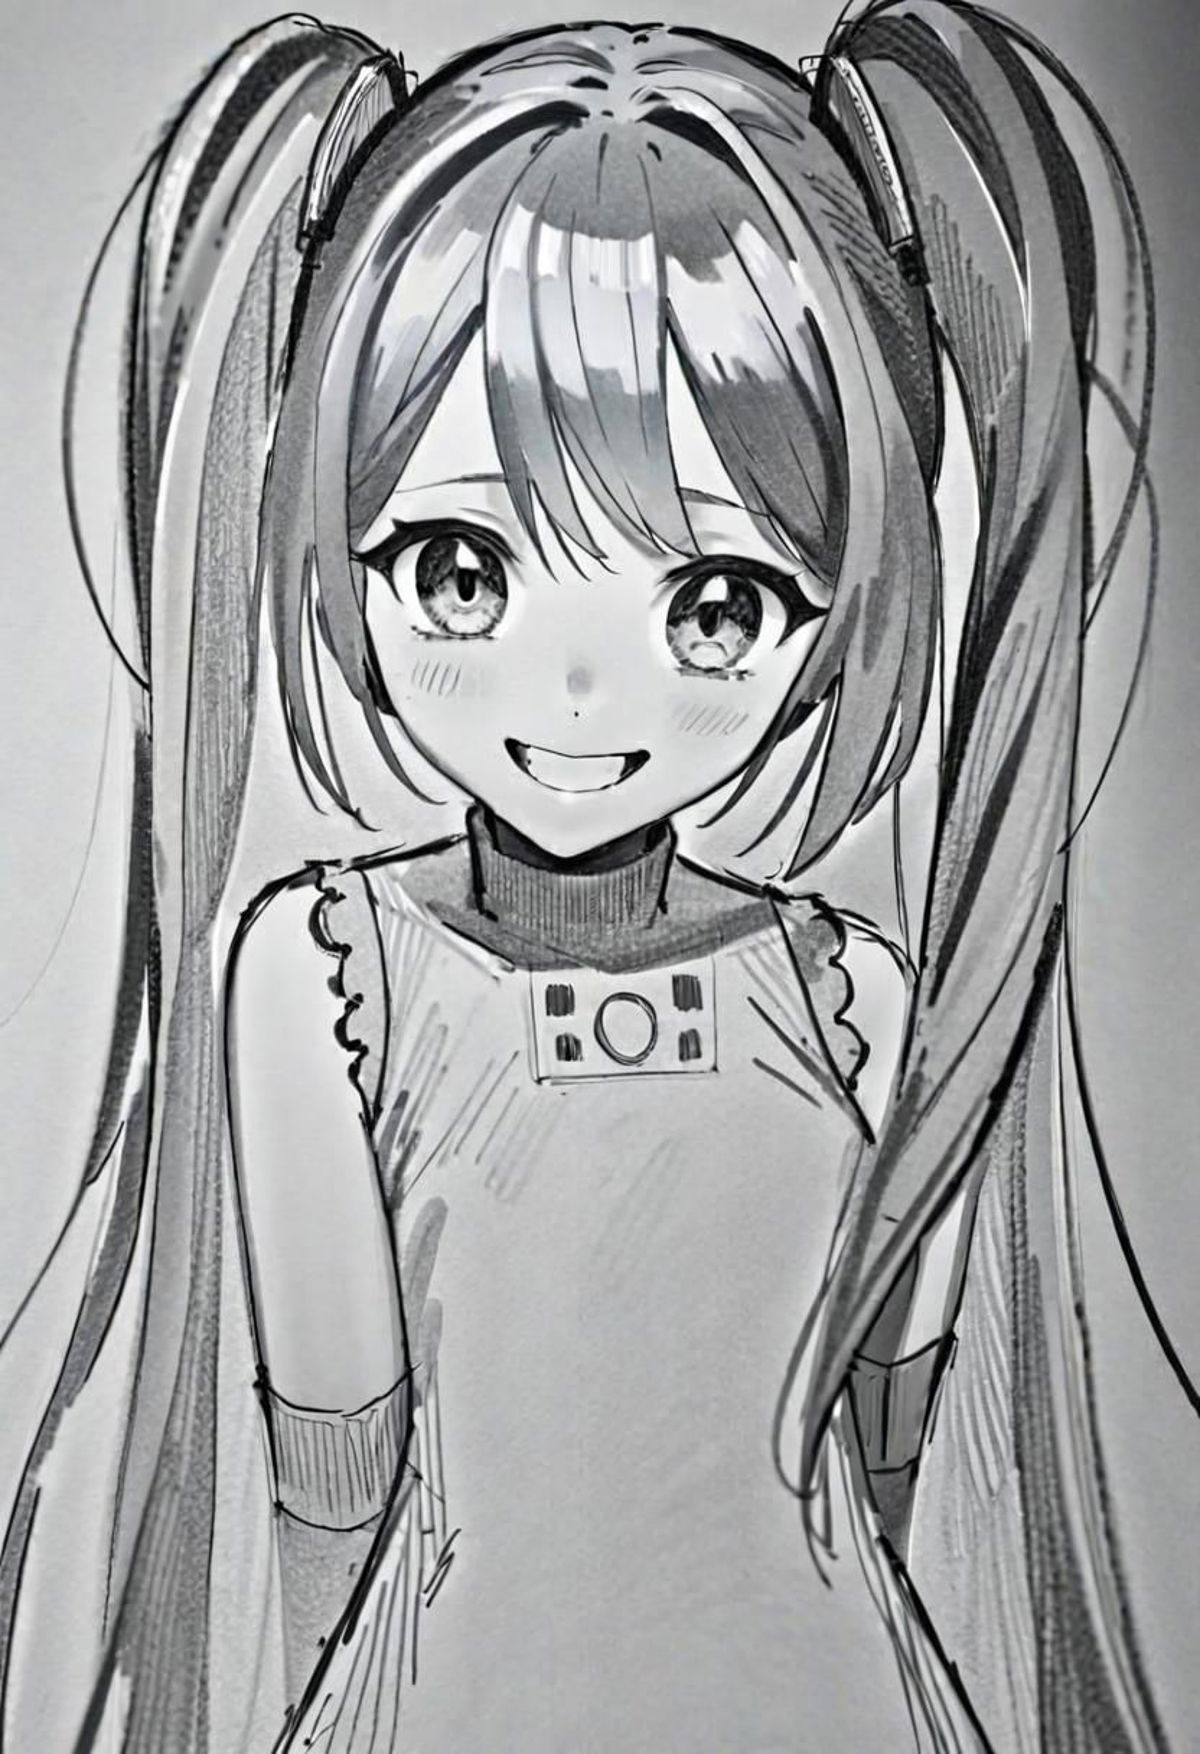 Hatsune Miku [Vocaloid] XL image by CitronLegacy